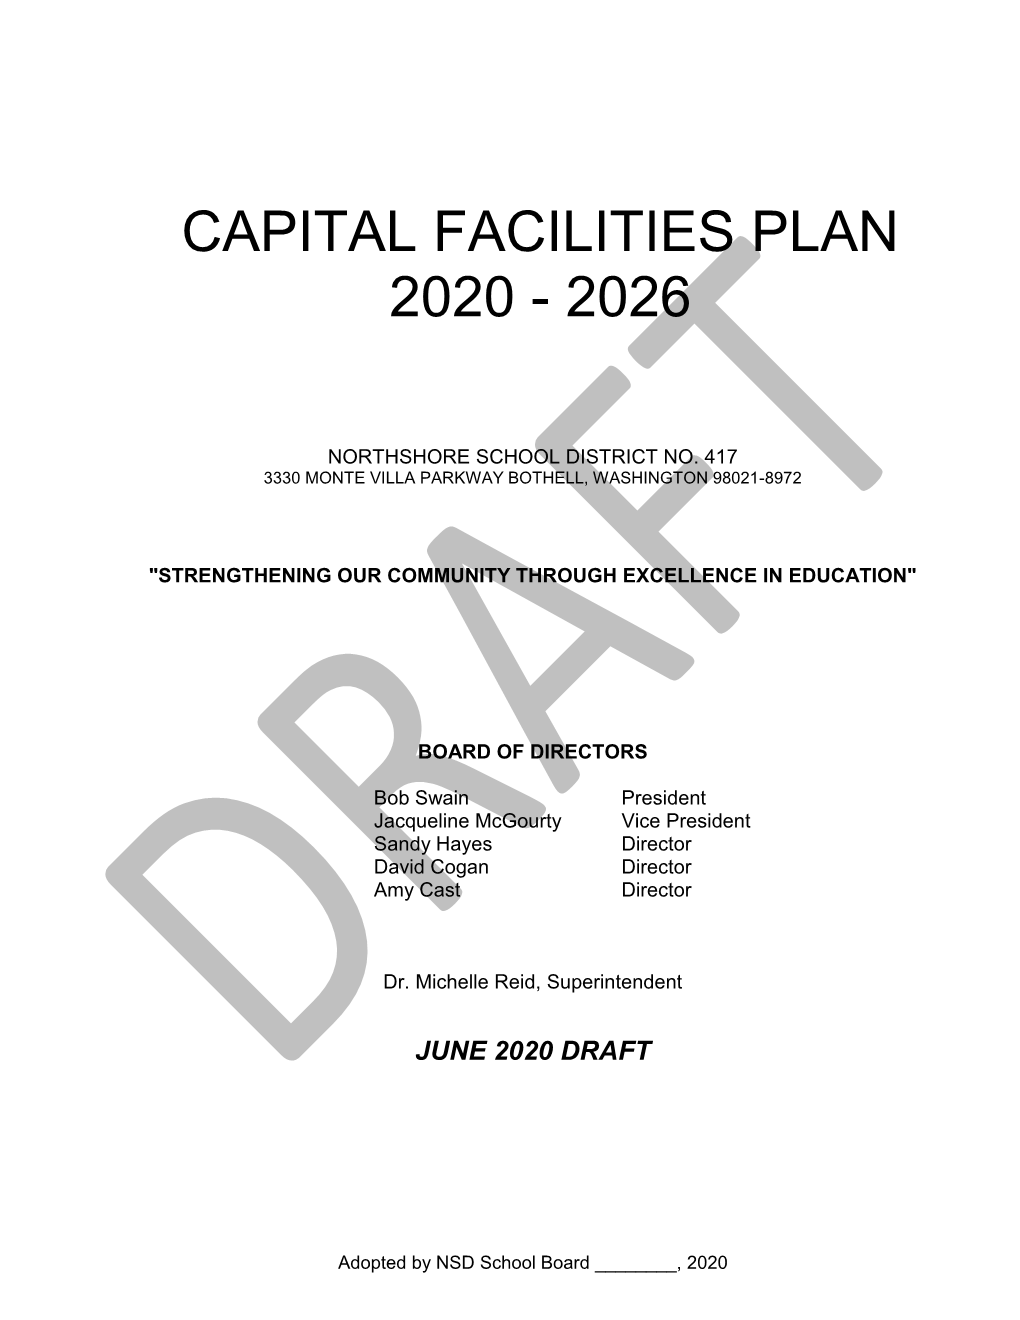 Capital Facilities Plan 2020 - 2026